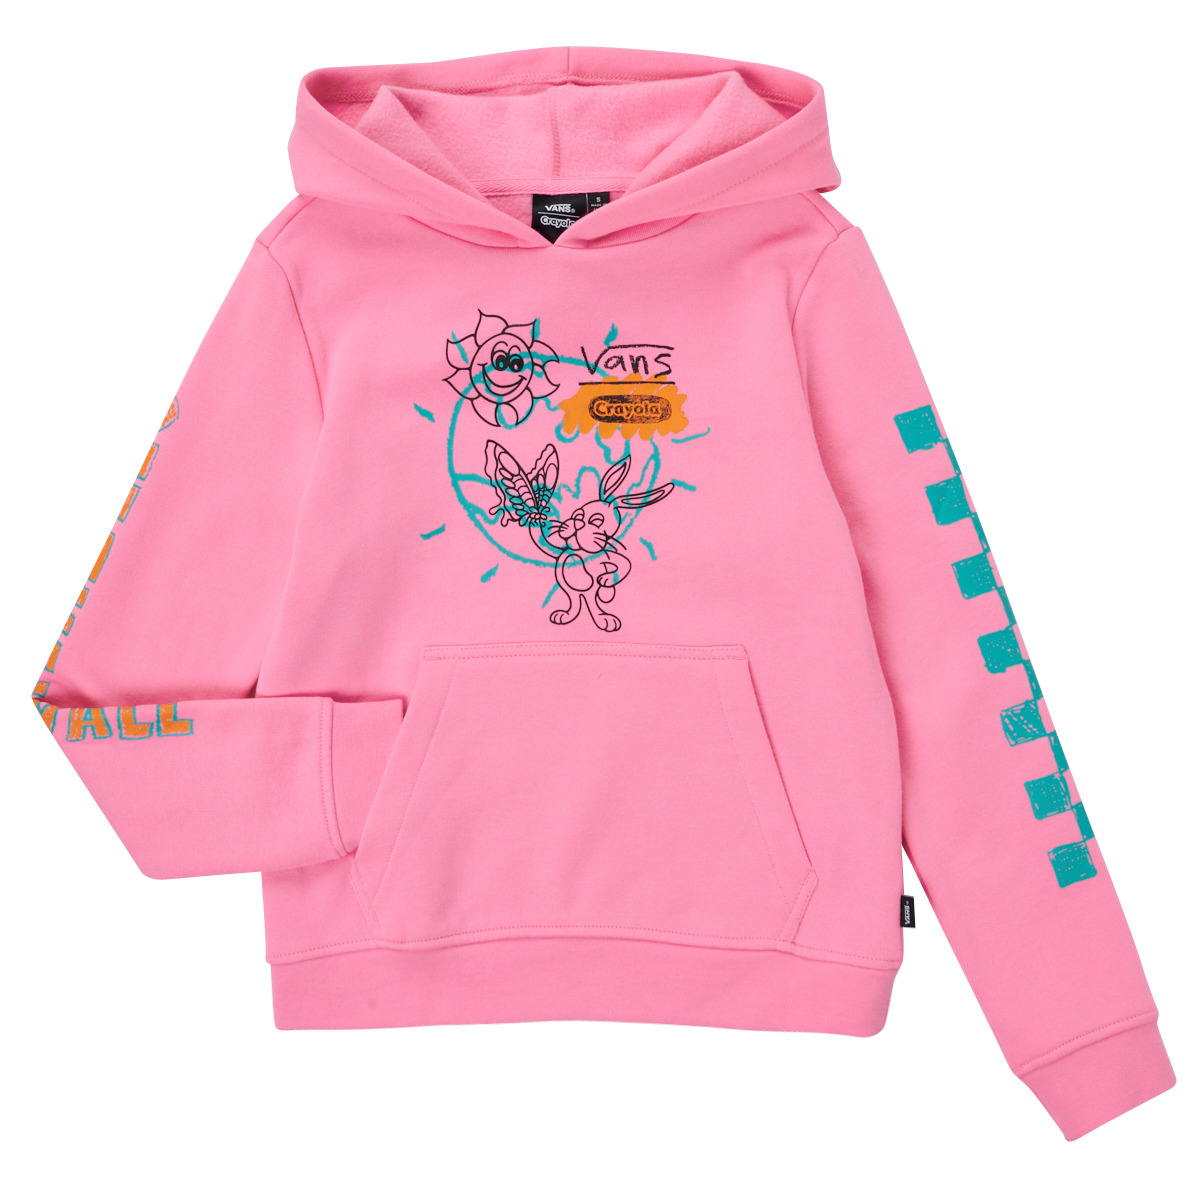 Vans VANS X CRAYOLA Child ! delivery | Spartoo 57,60 sweaters - - Europe Fast € Clothing Pink HOODIE